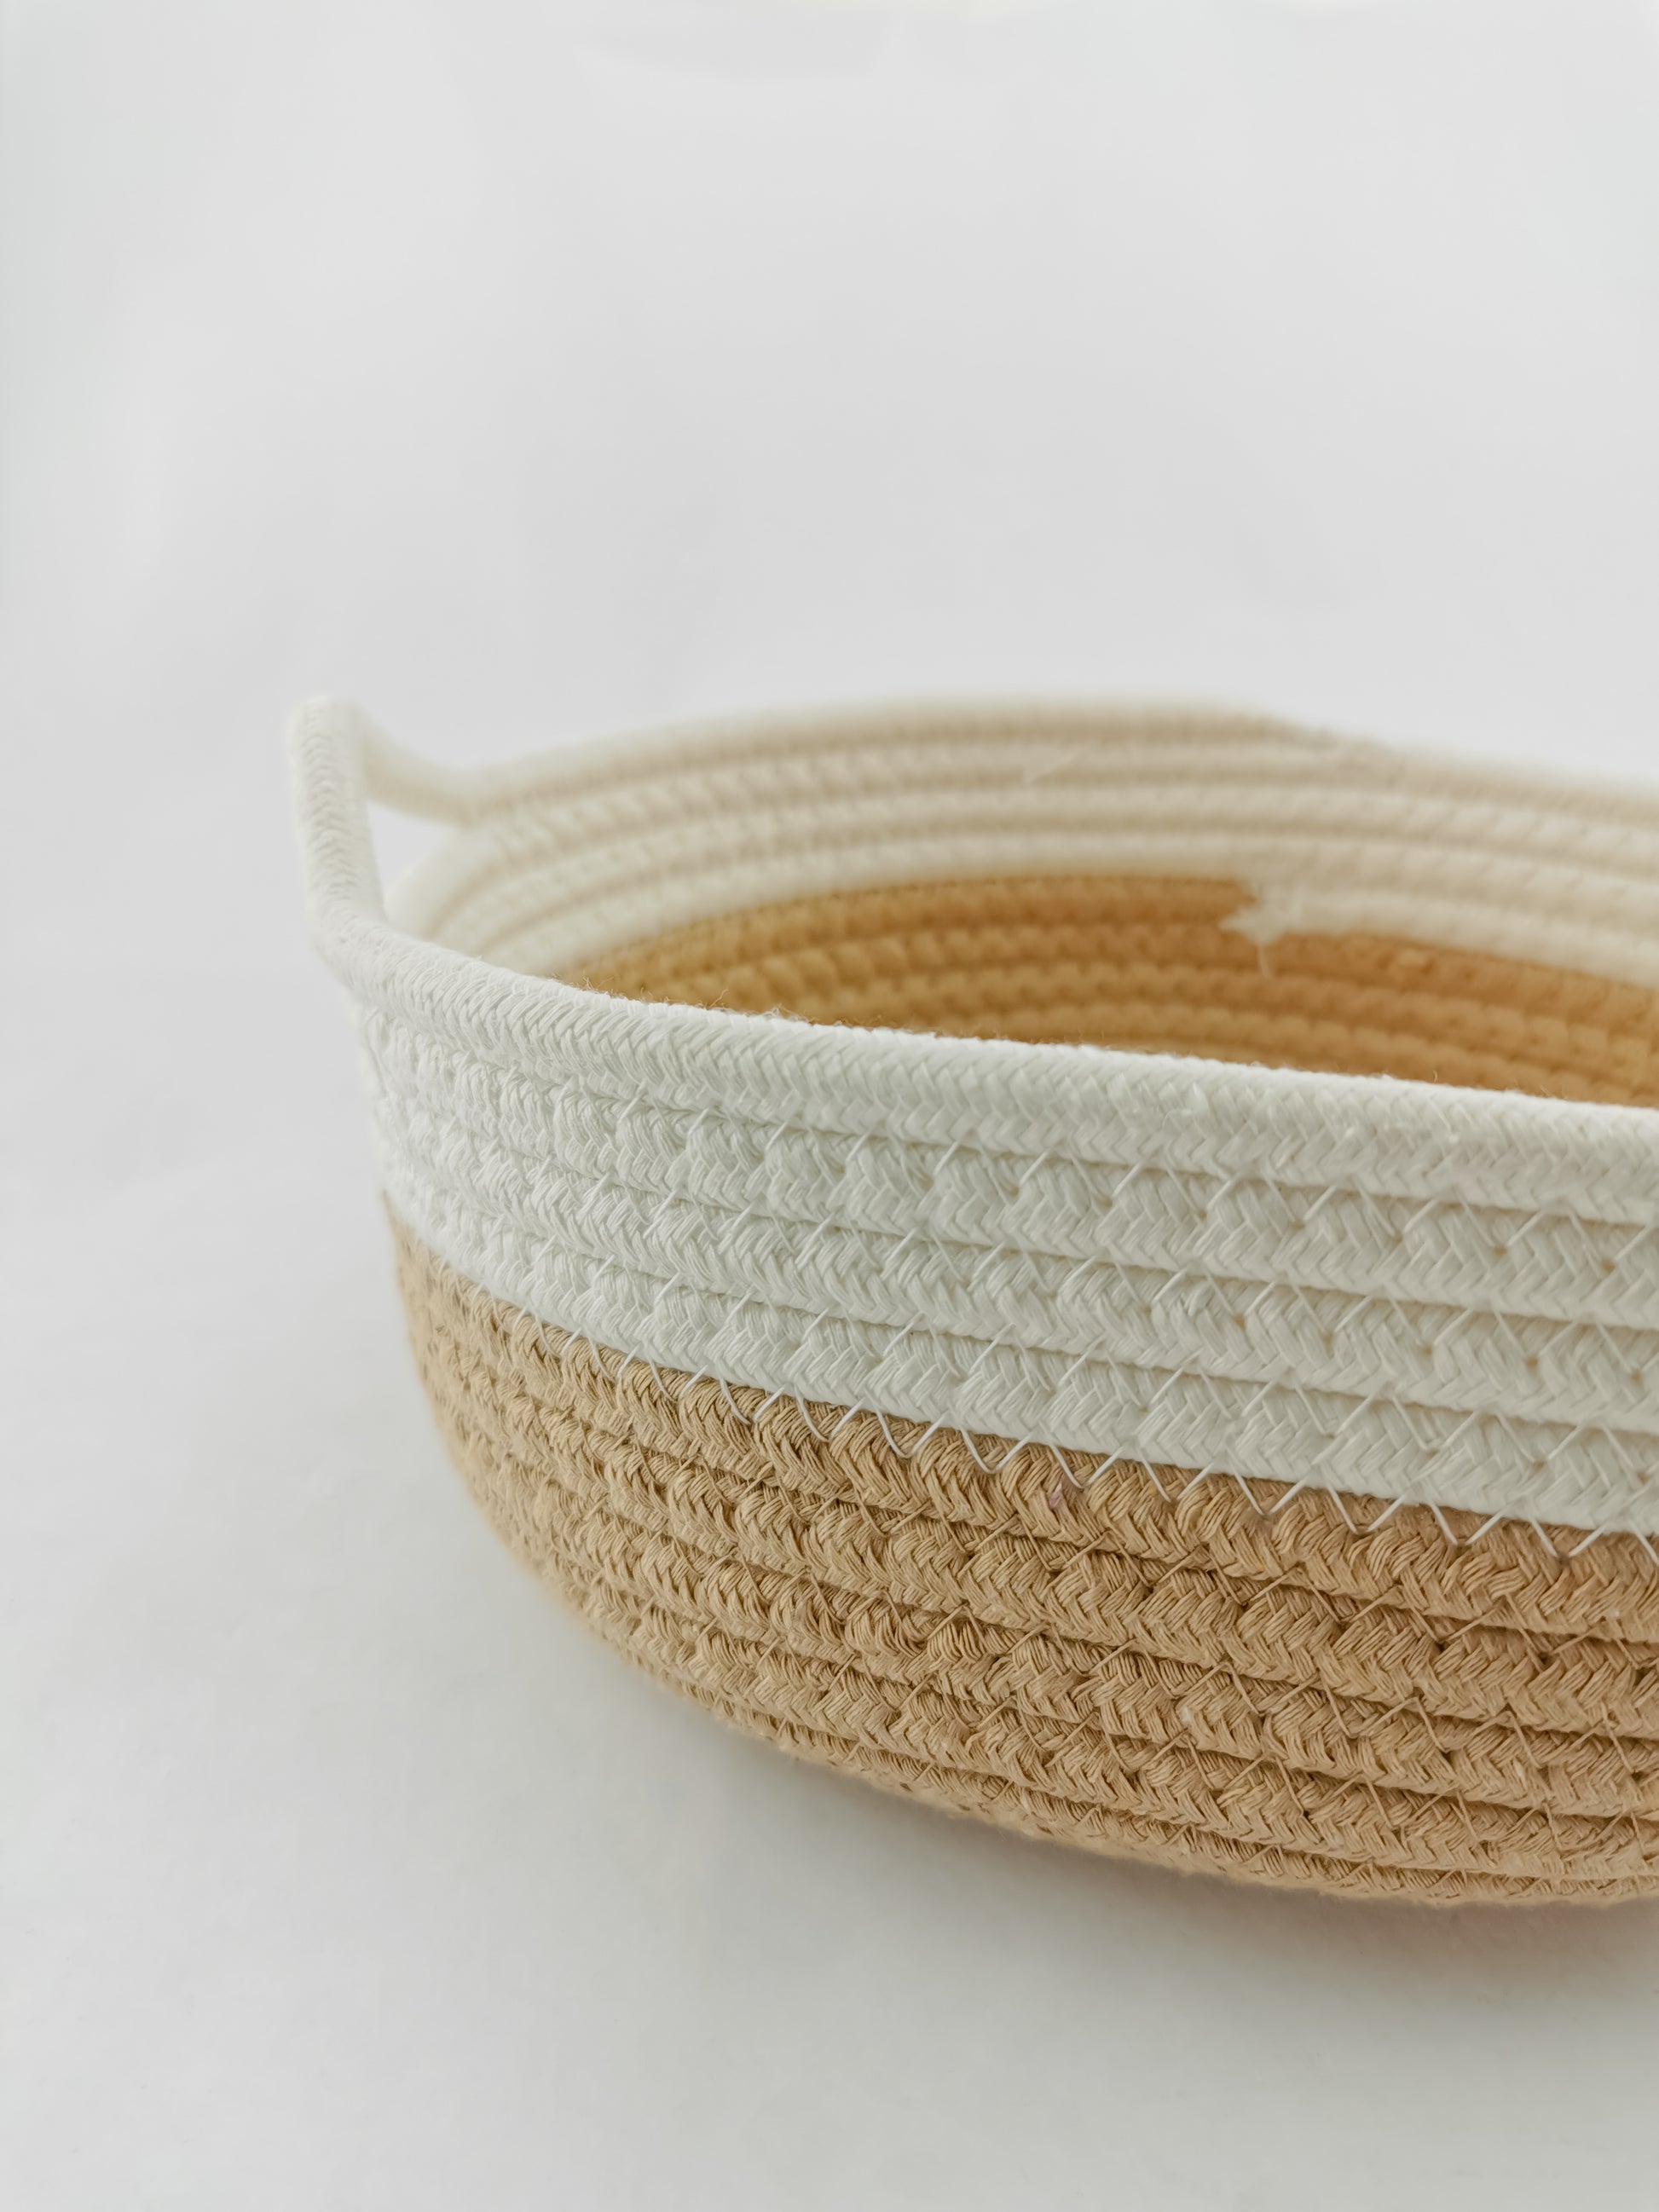 25cm Multi-Purpose Cotton Woven Knit Basket - Gifts by Art Tree